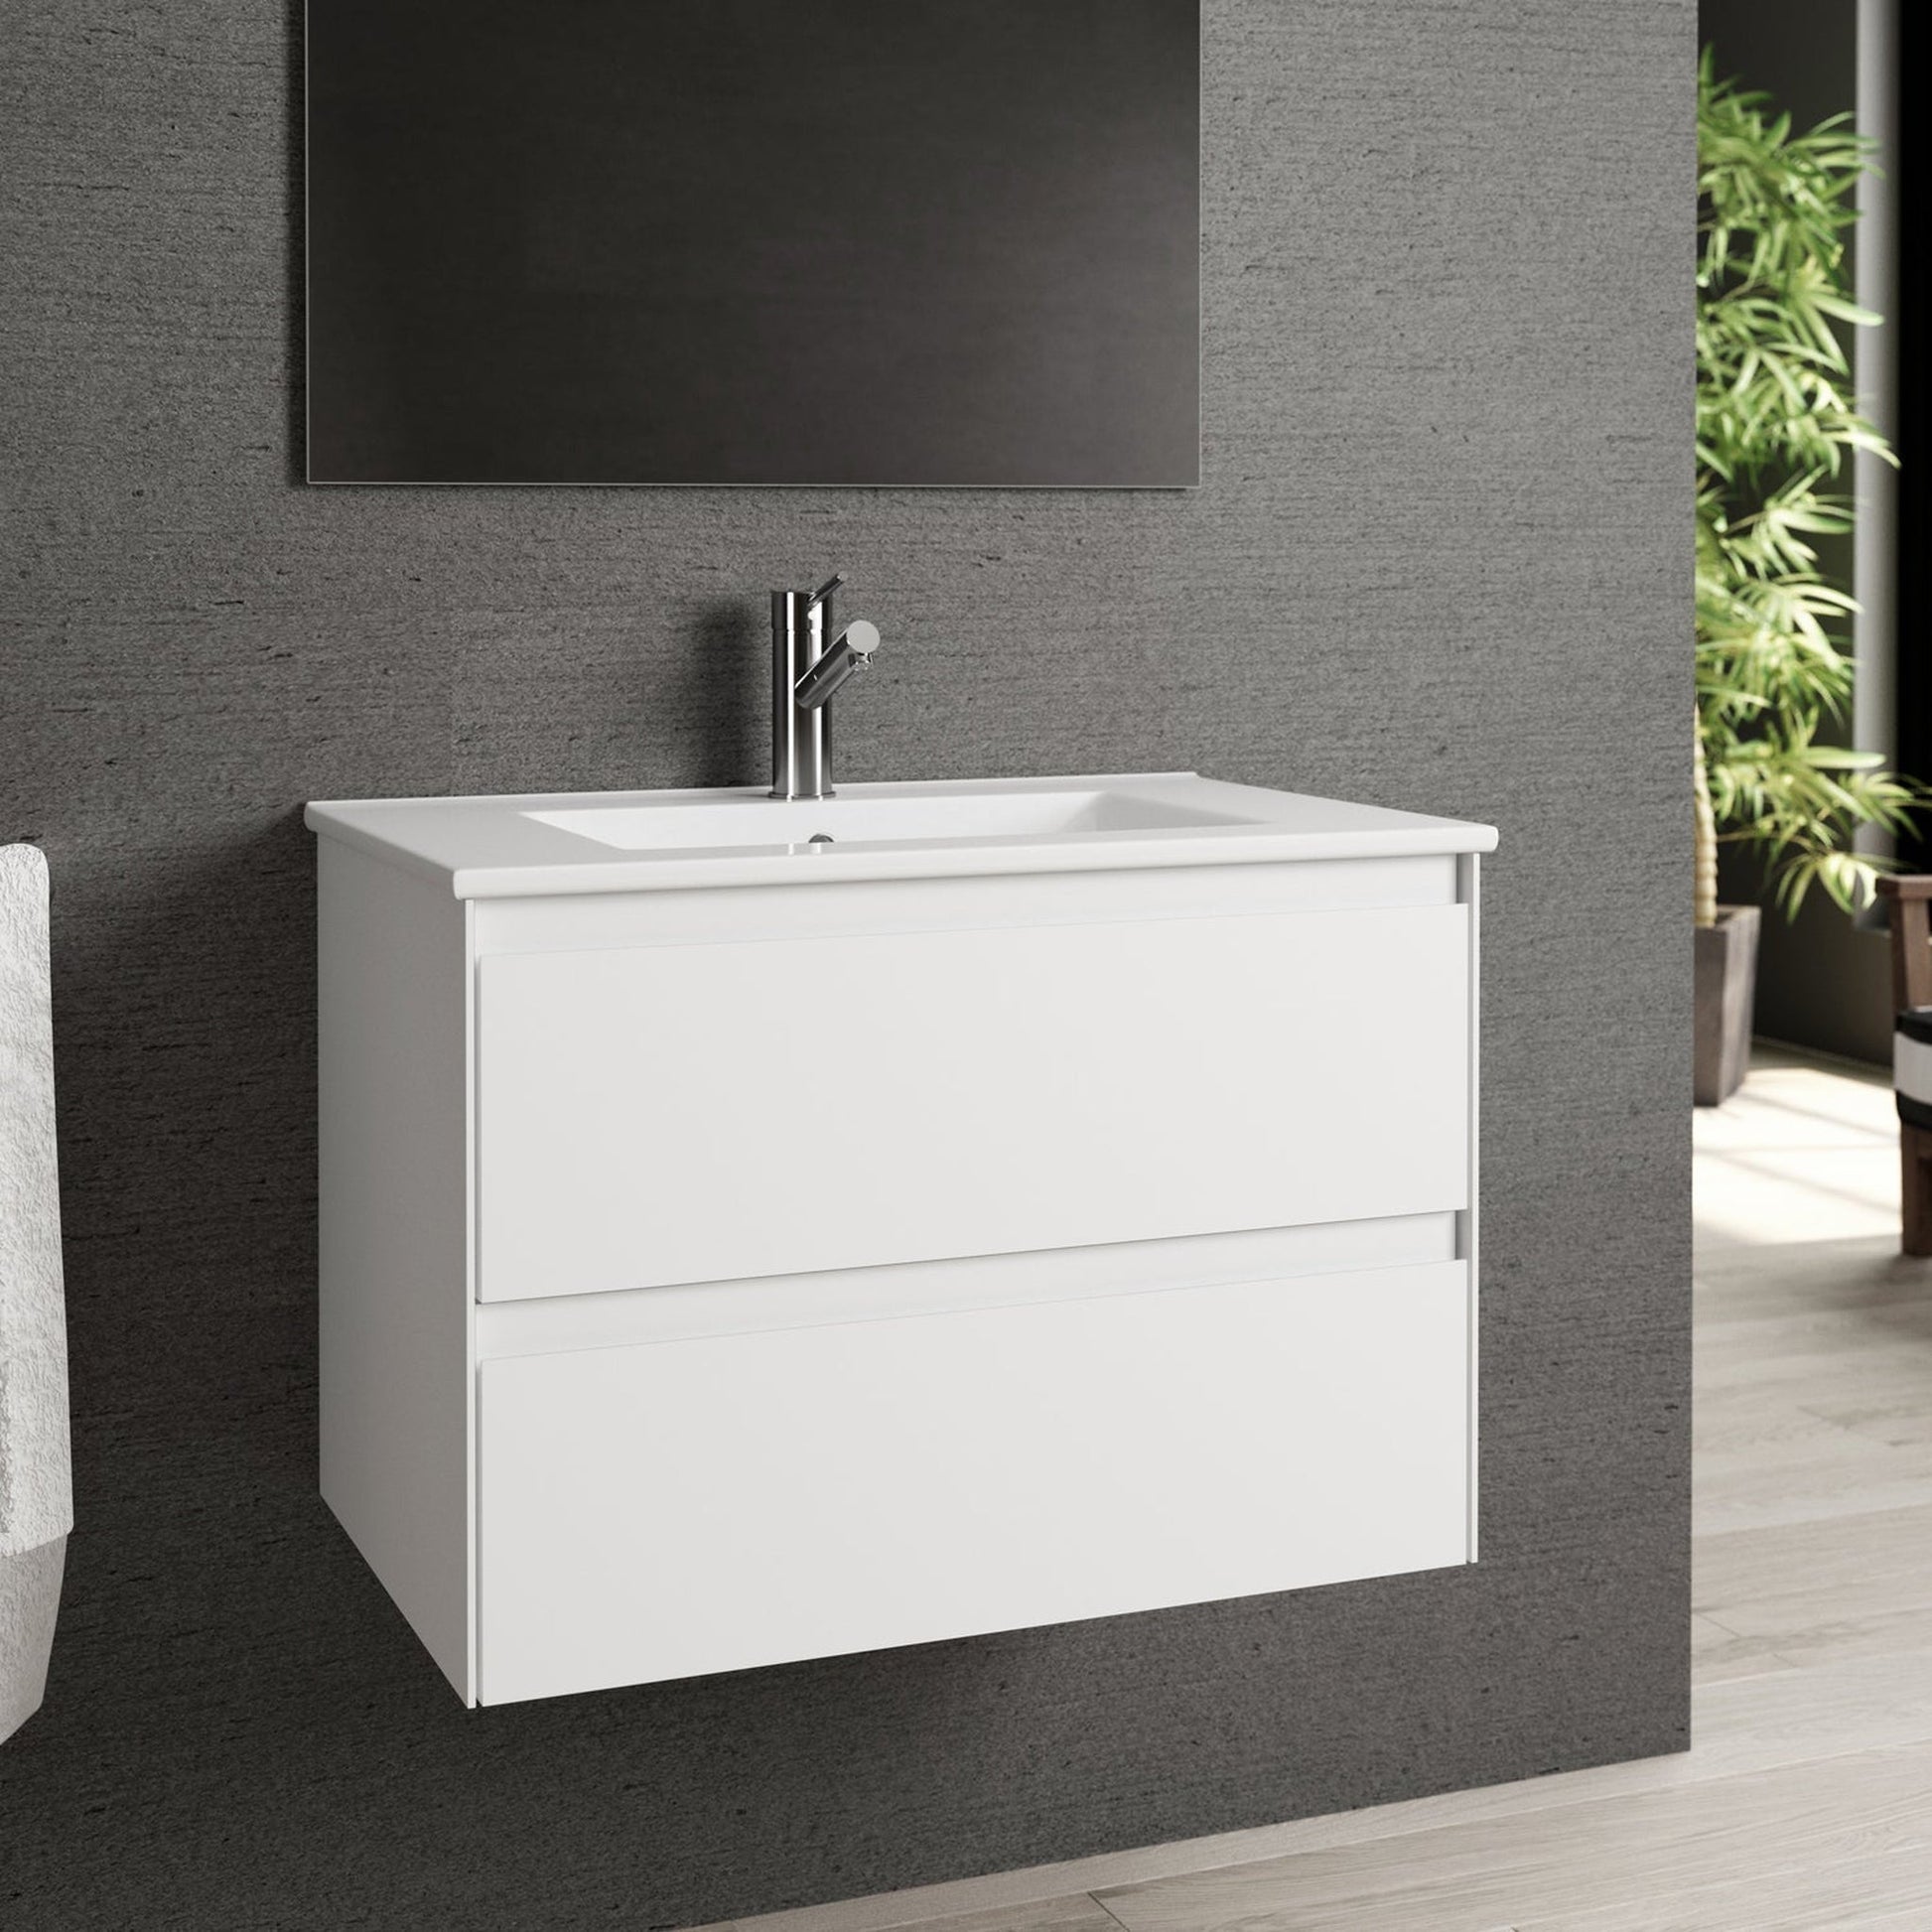 Bathroom Vanity with Ceramic Basin Sink 39 Inch Wall Mounted